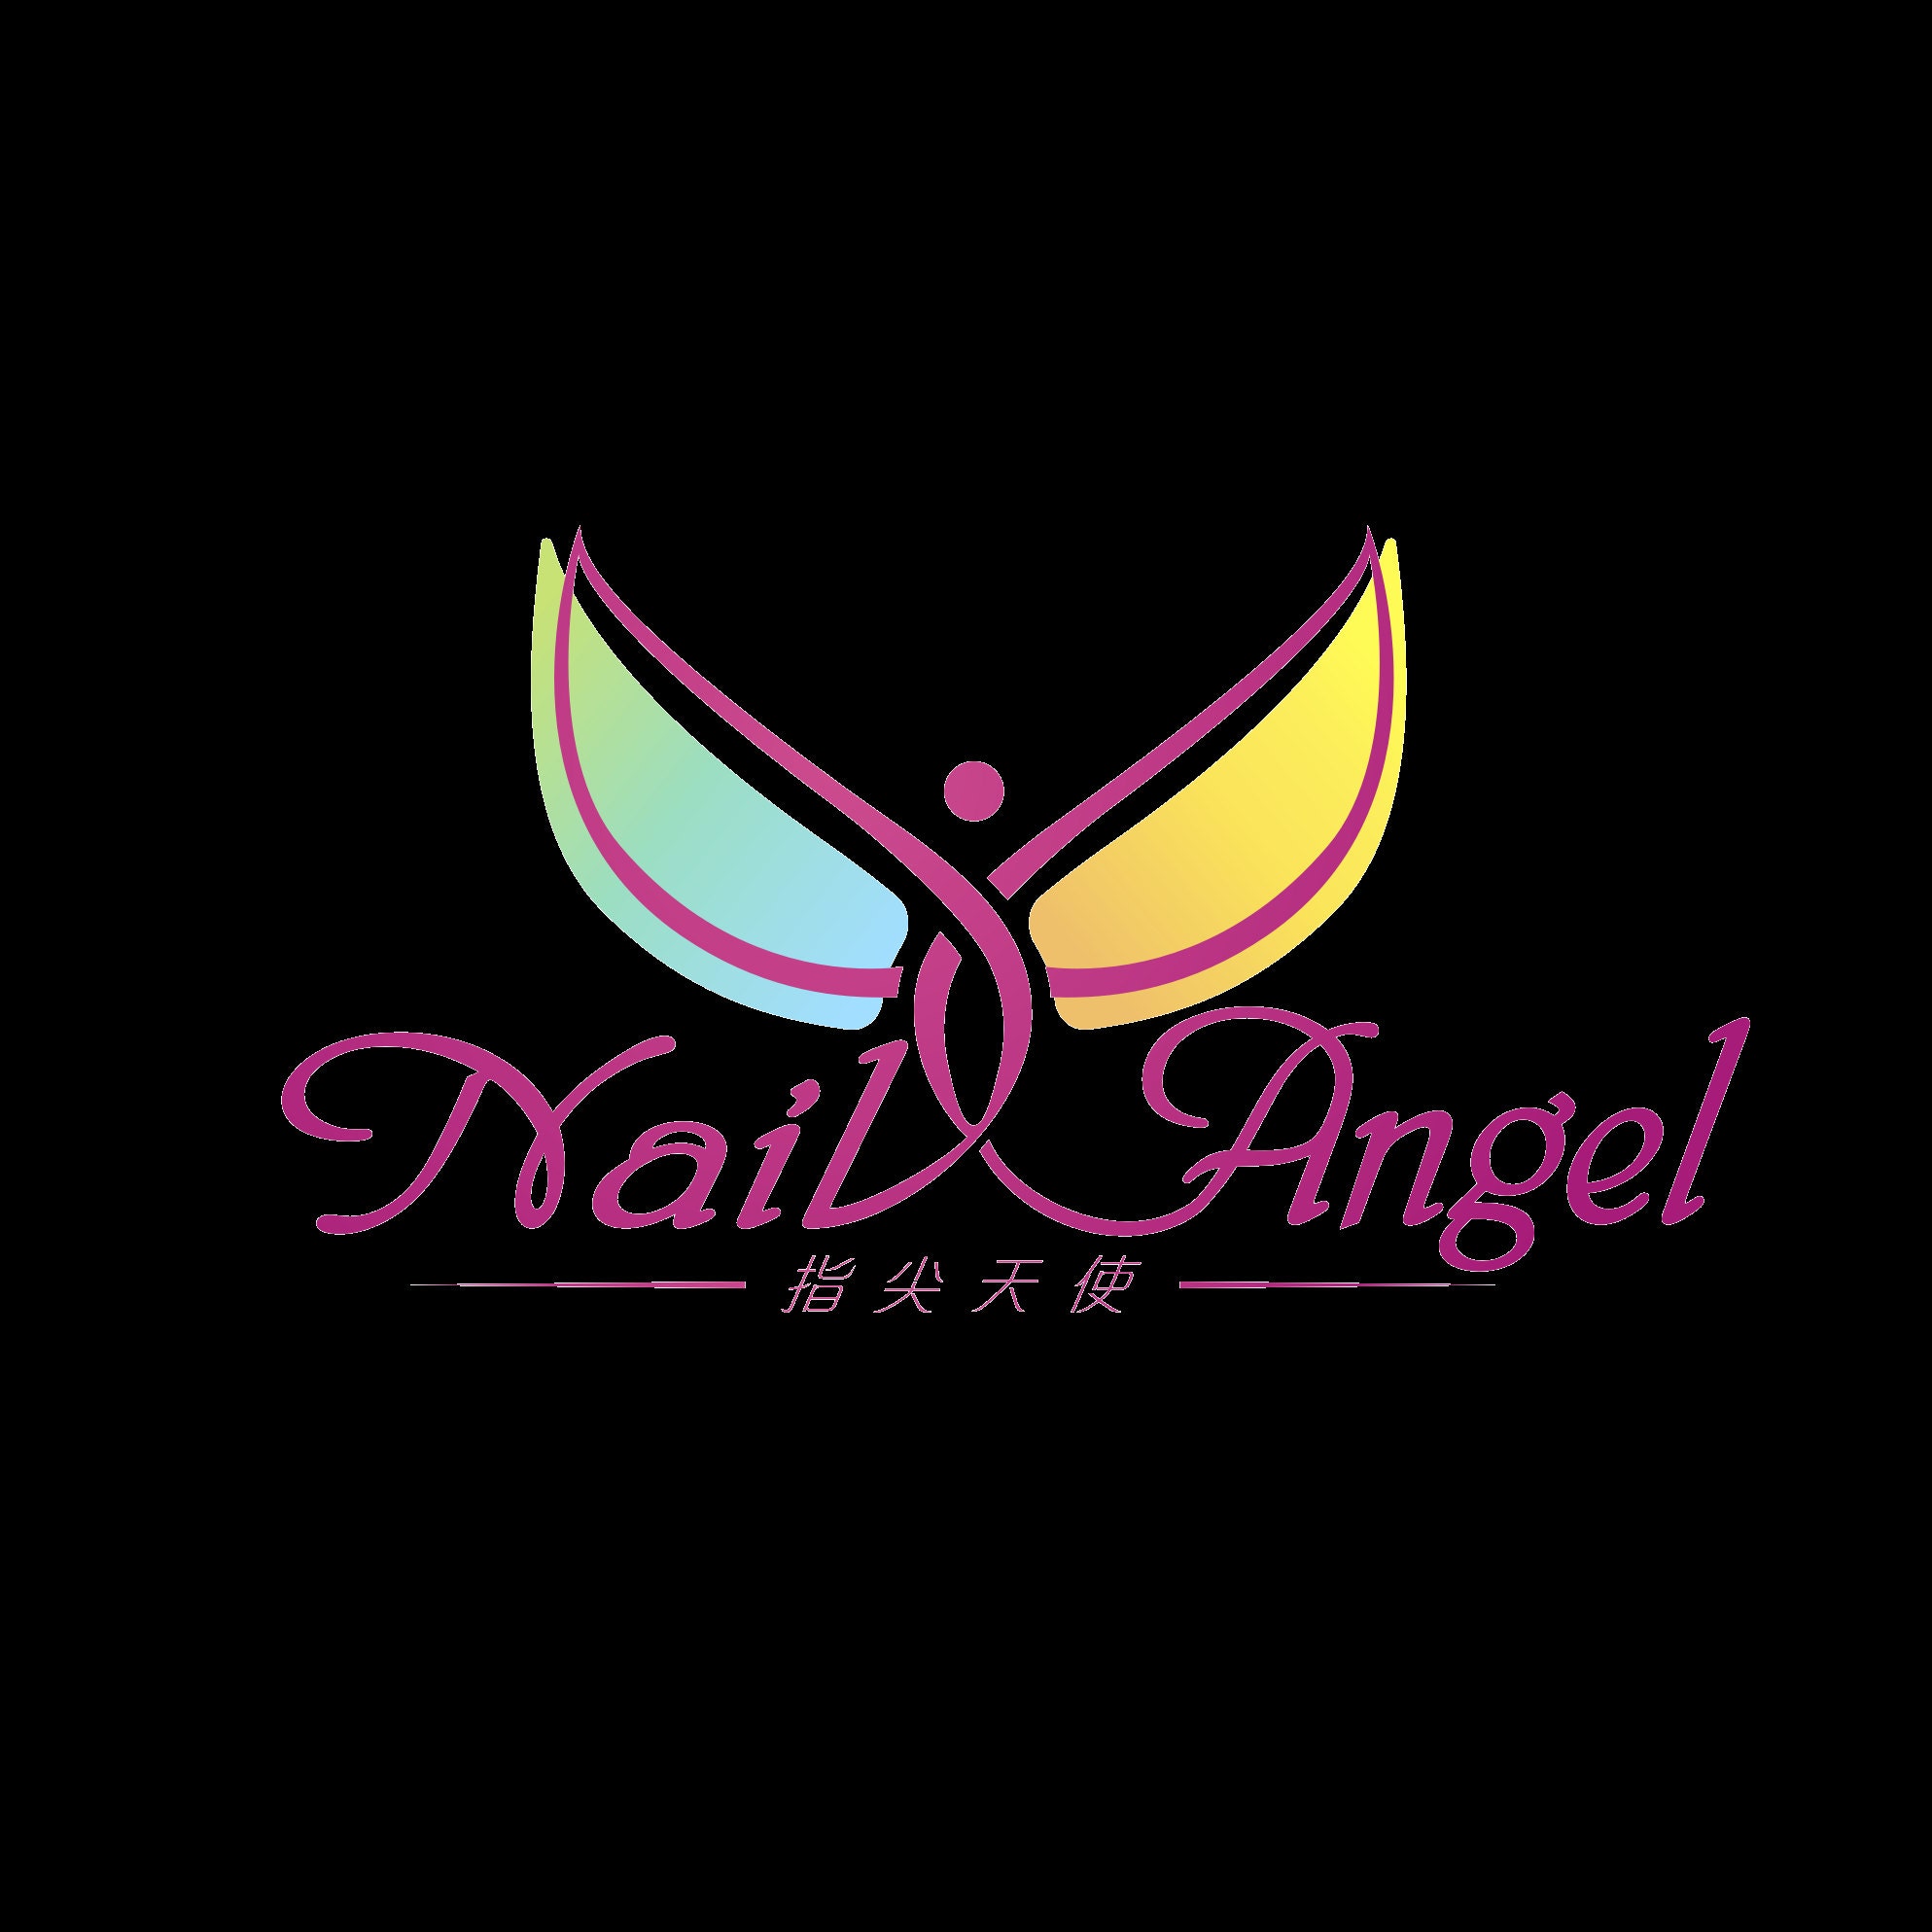 New set acrylic & color gel 25€ - Angel Nails Cork | Facebook